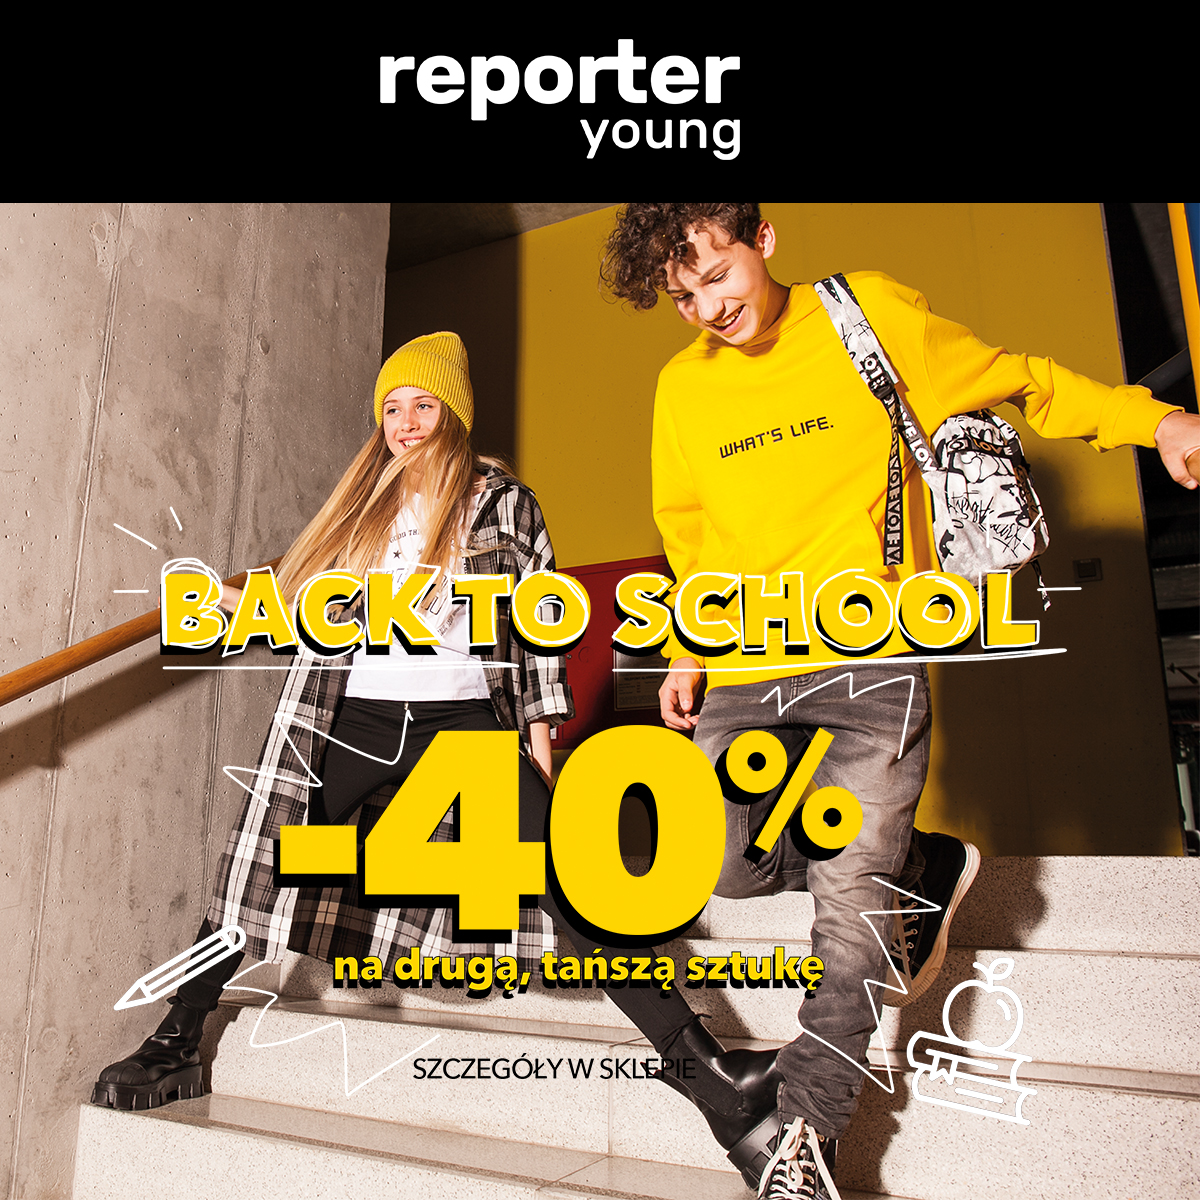 Back To School! w Reporter Young! - Galeria Jurowiecka